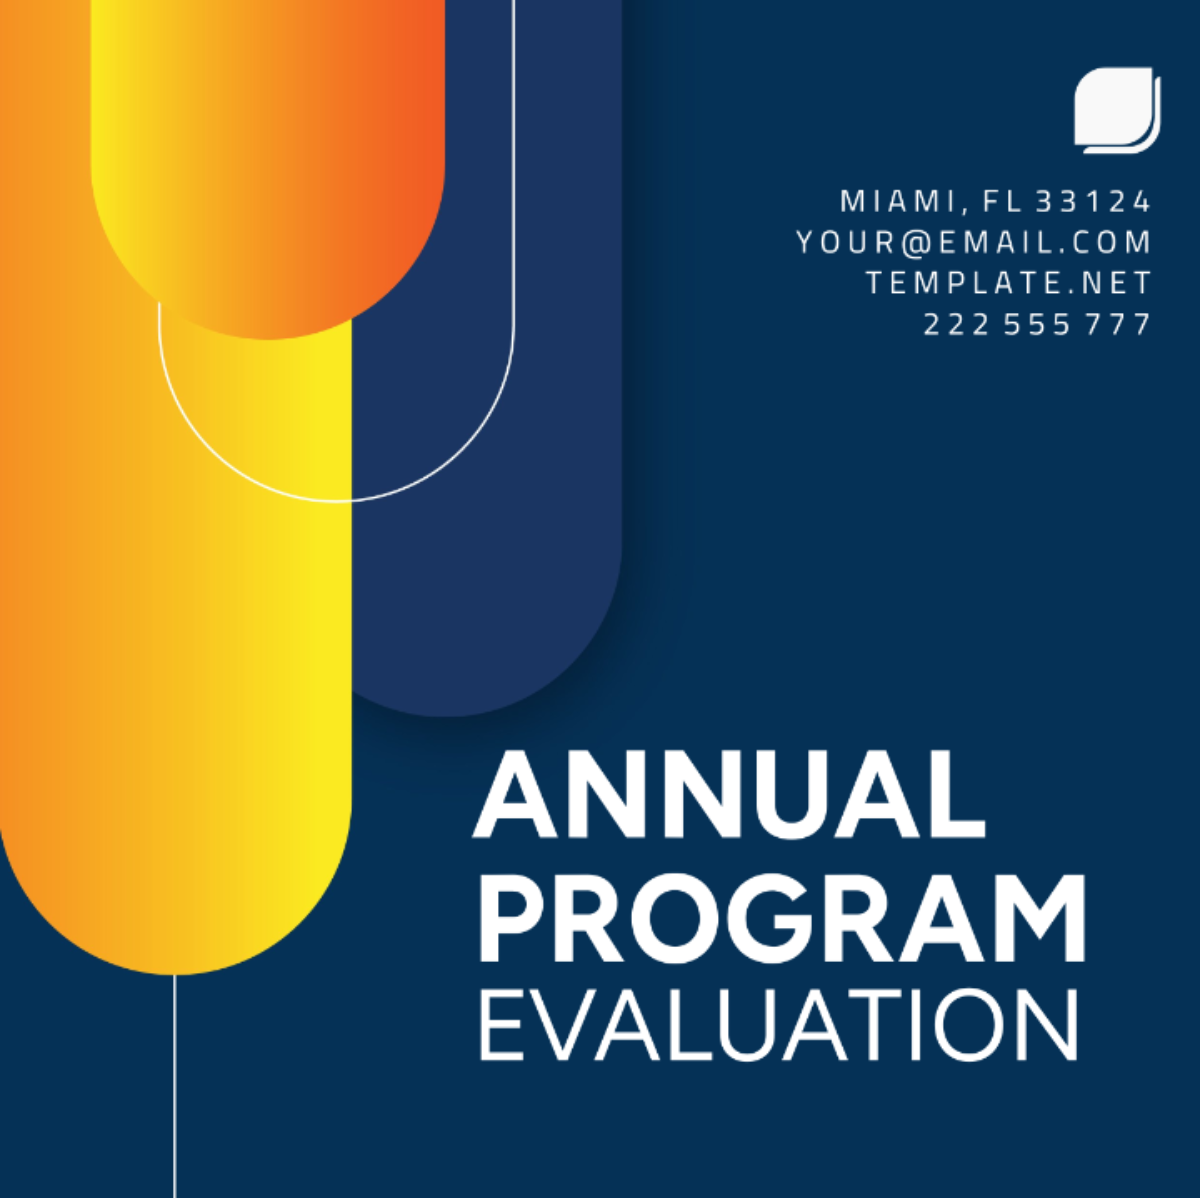 Annual Program Evaluation Template